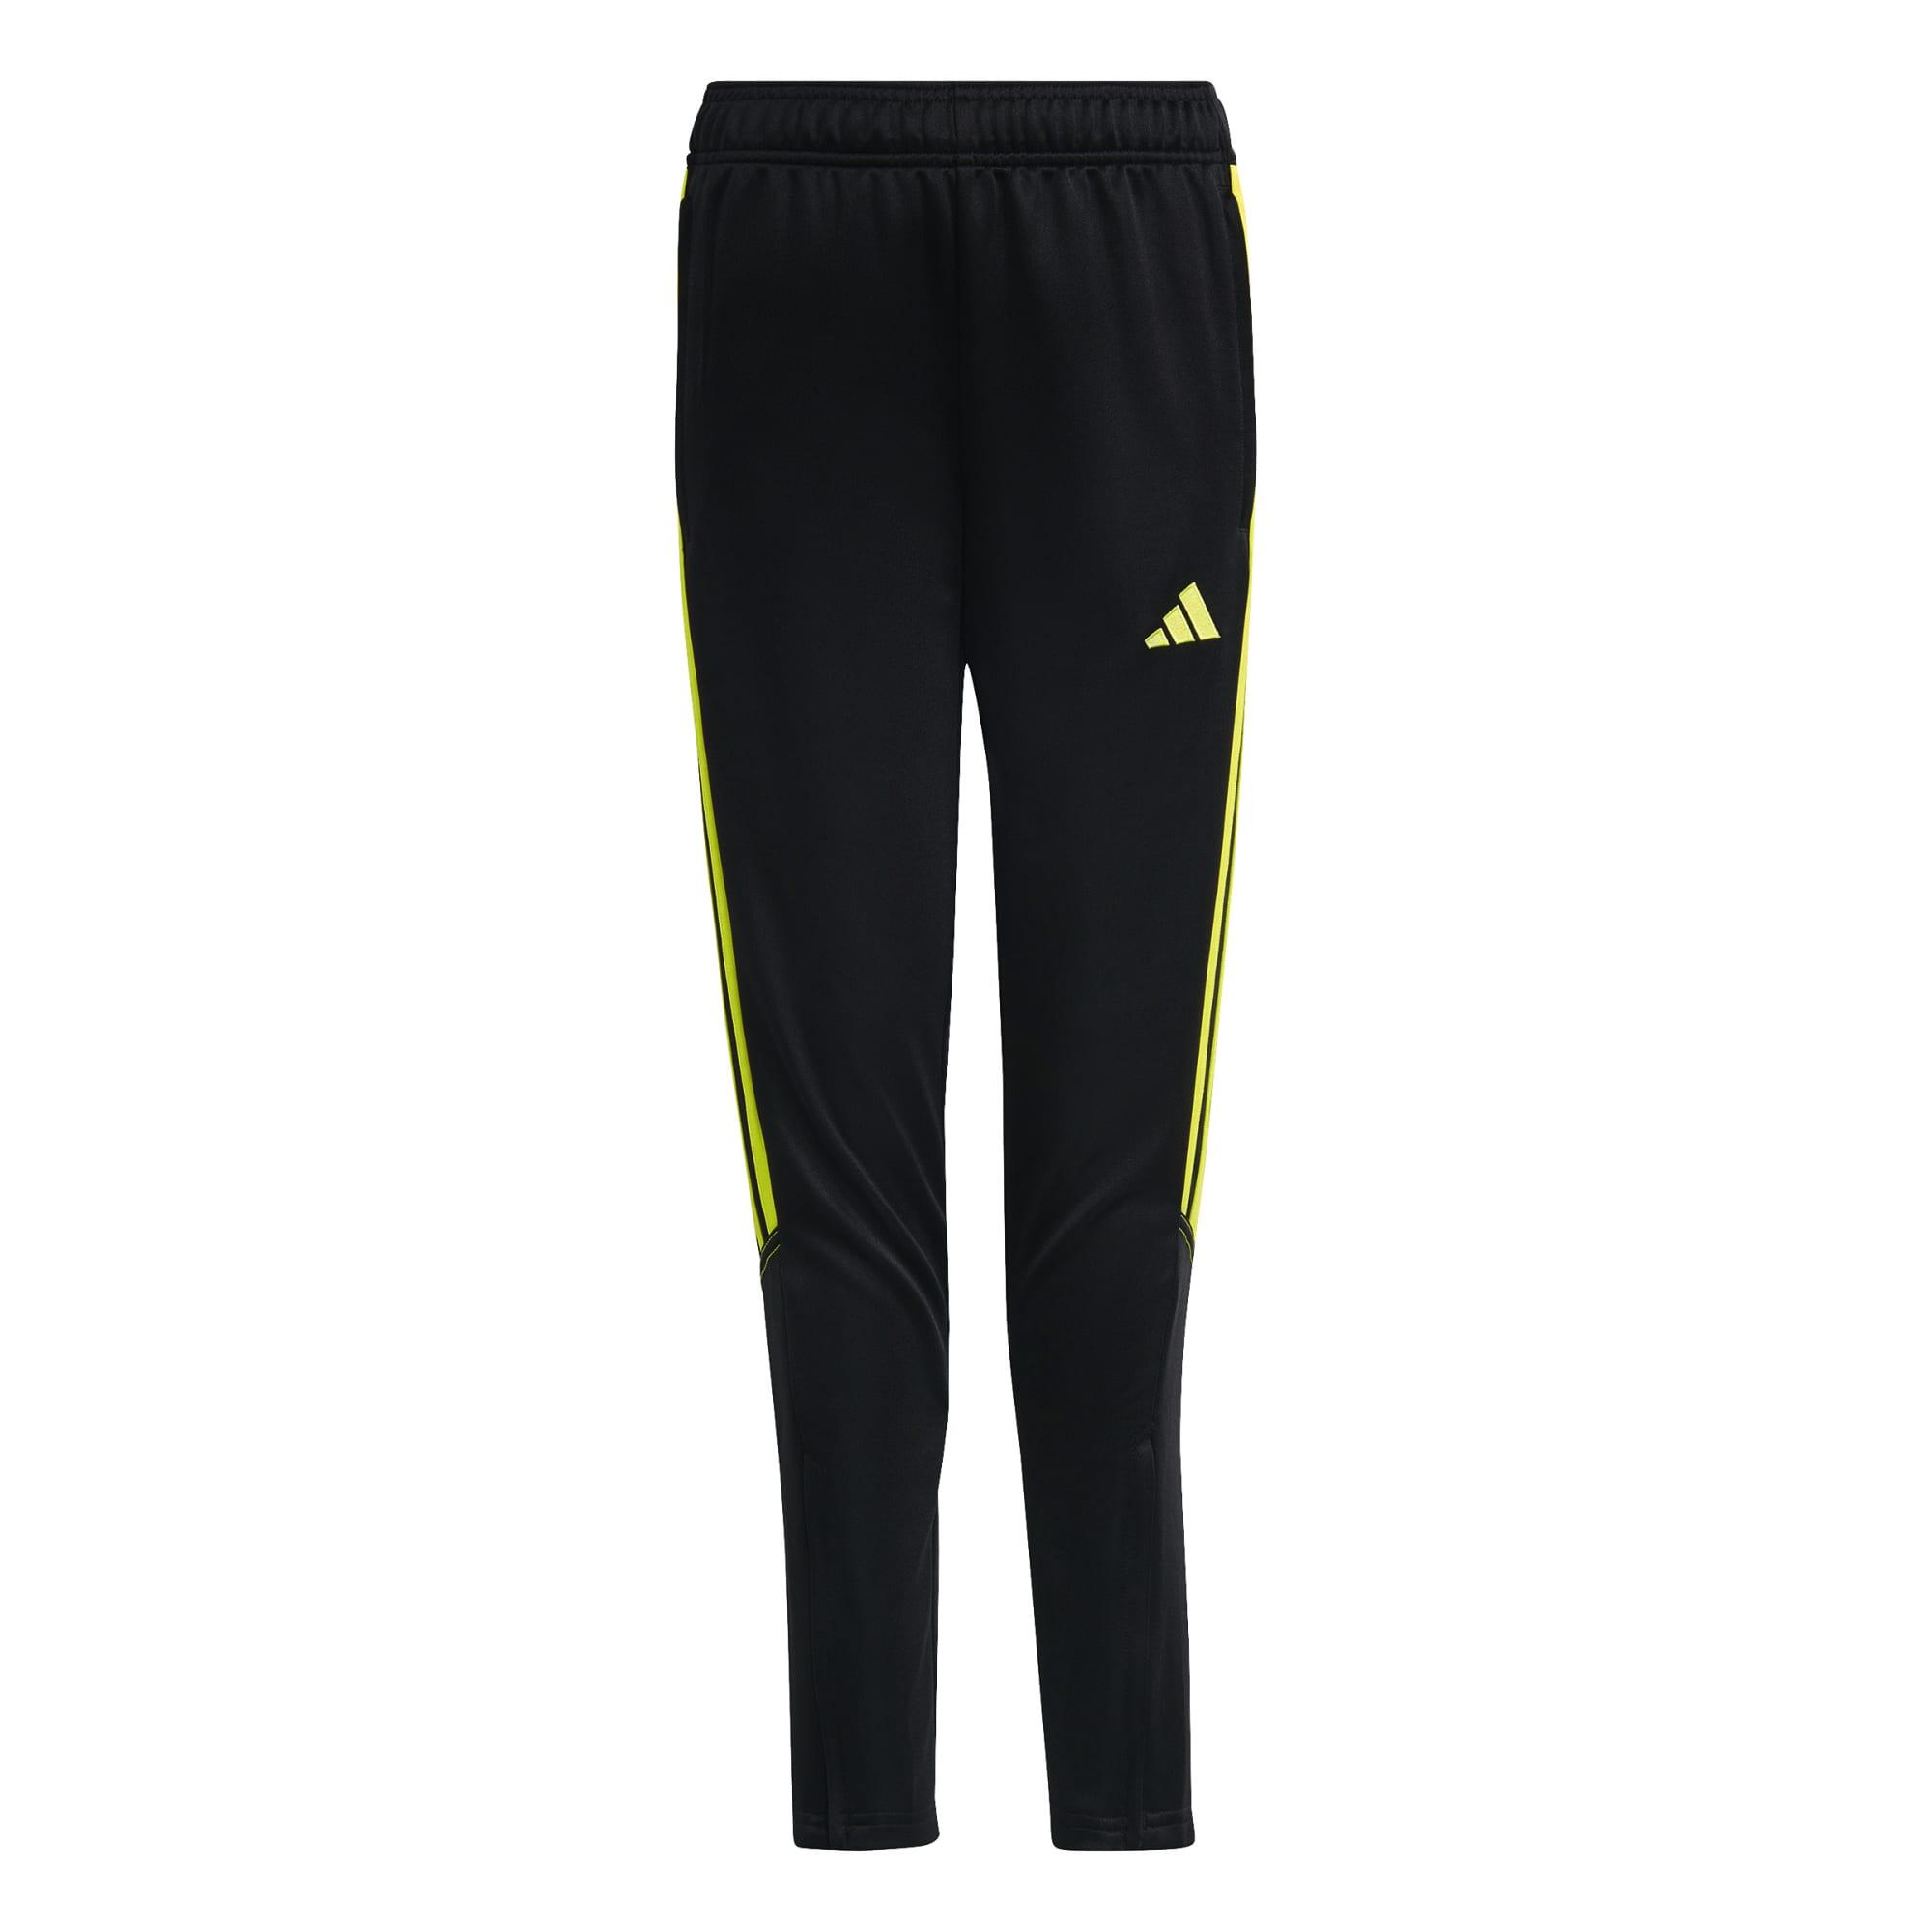 Pantalon de trening Adidas Tiro Club Negru-Galben Copii adidas  Imbracaminte futsal